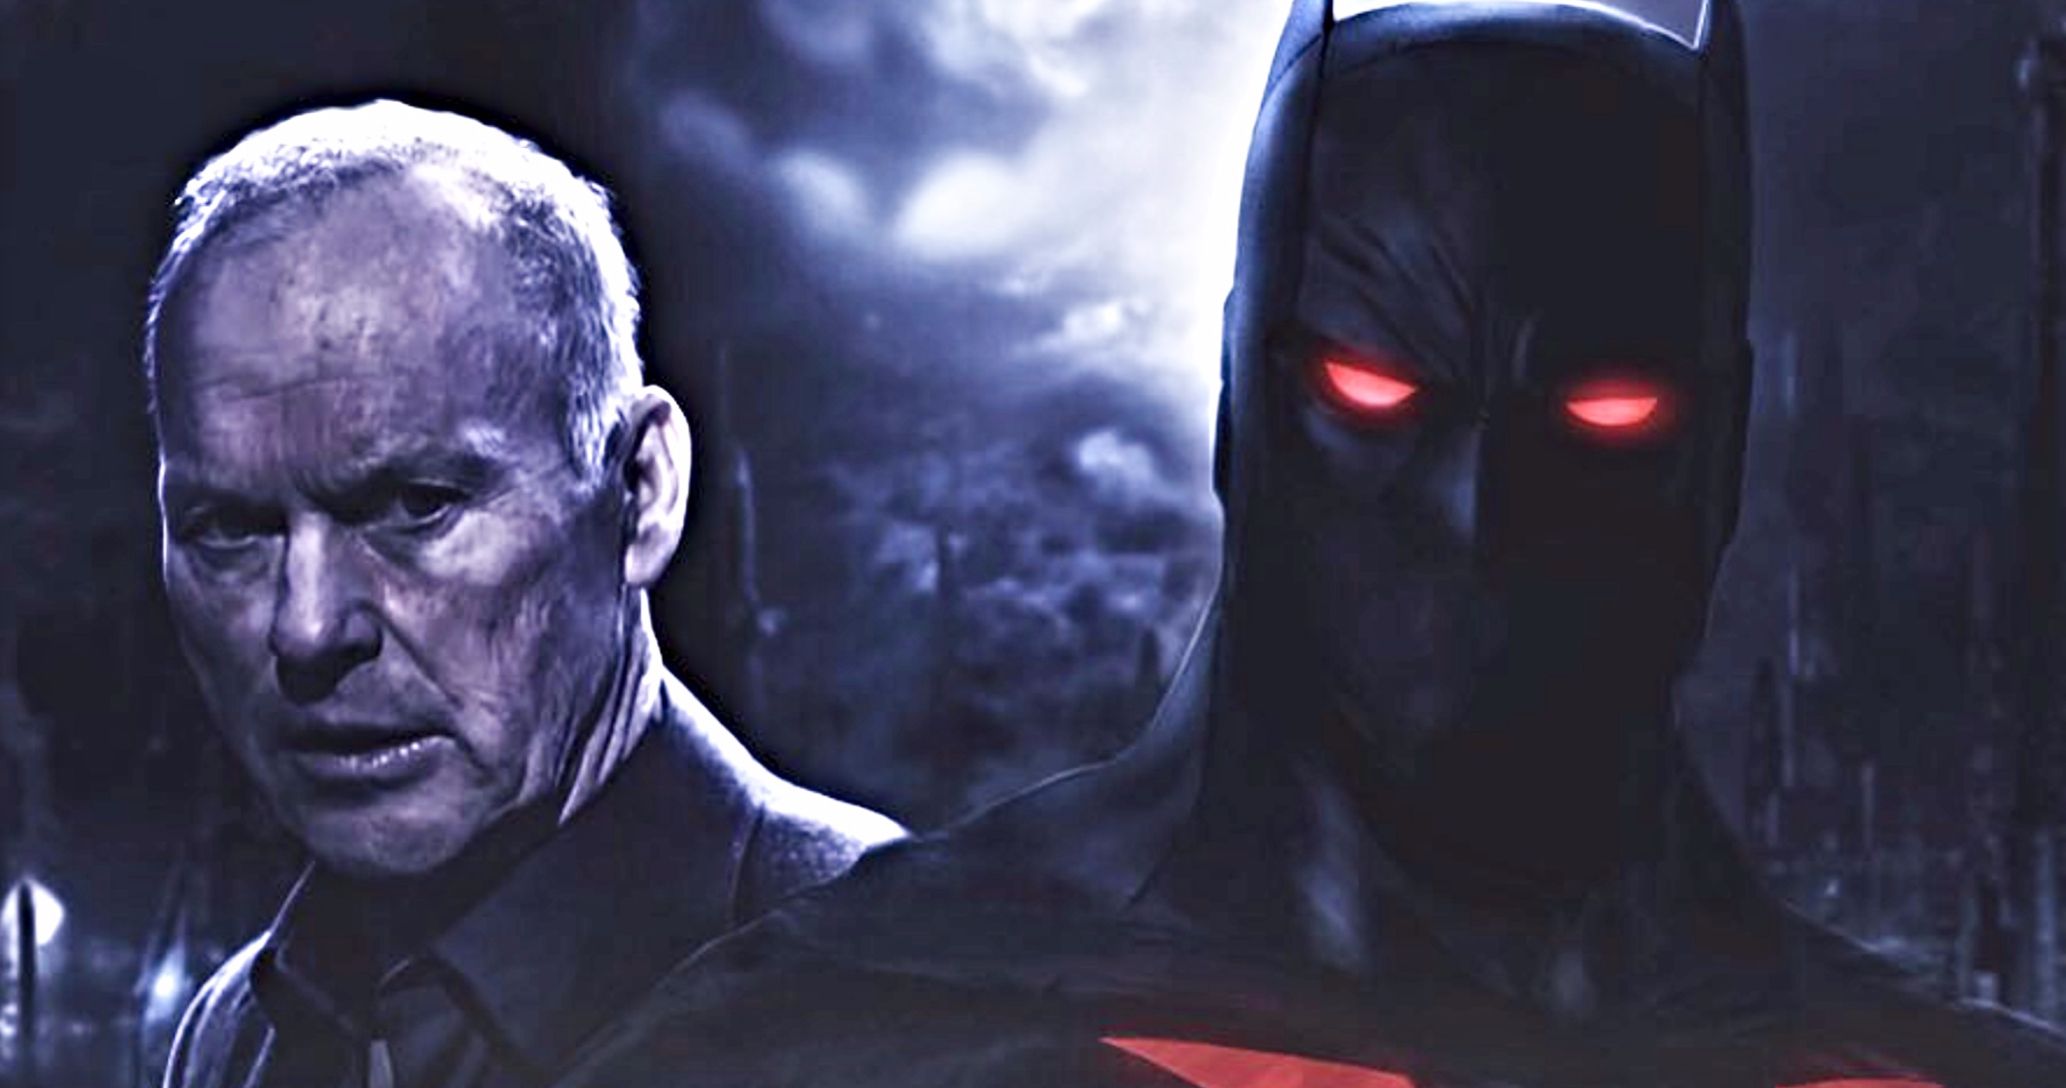 Batman Beyond Fan Art Has Michael Keaton Returning as an Older Bruce Wayne